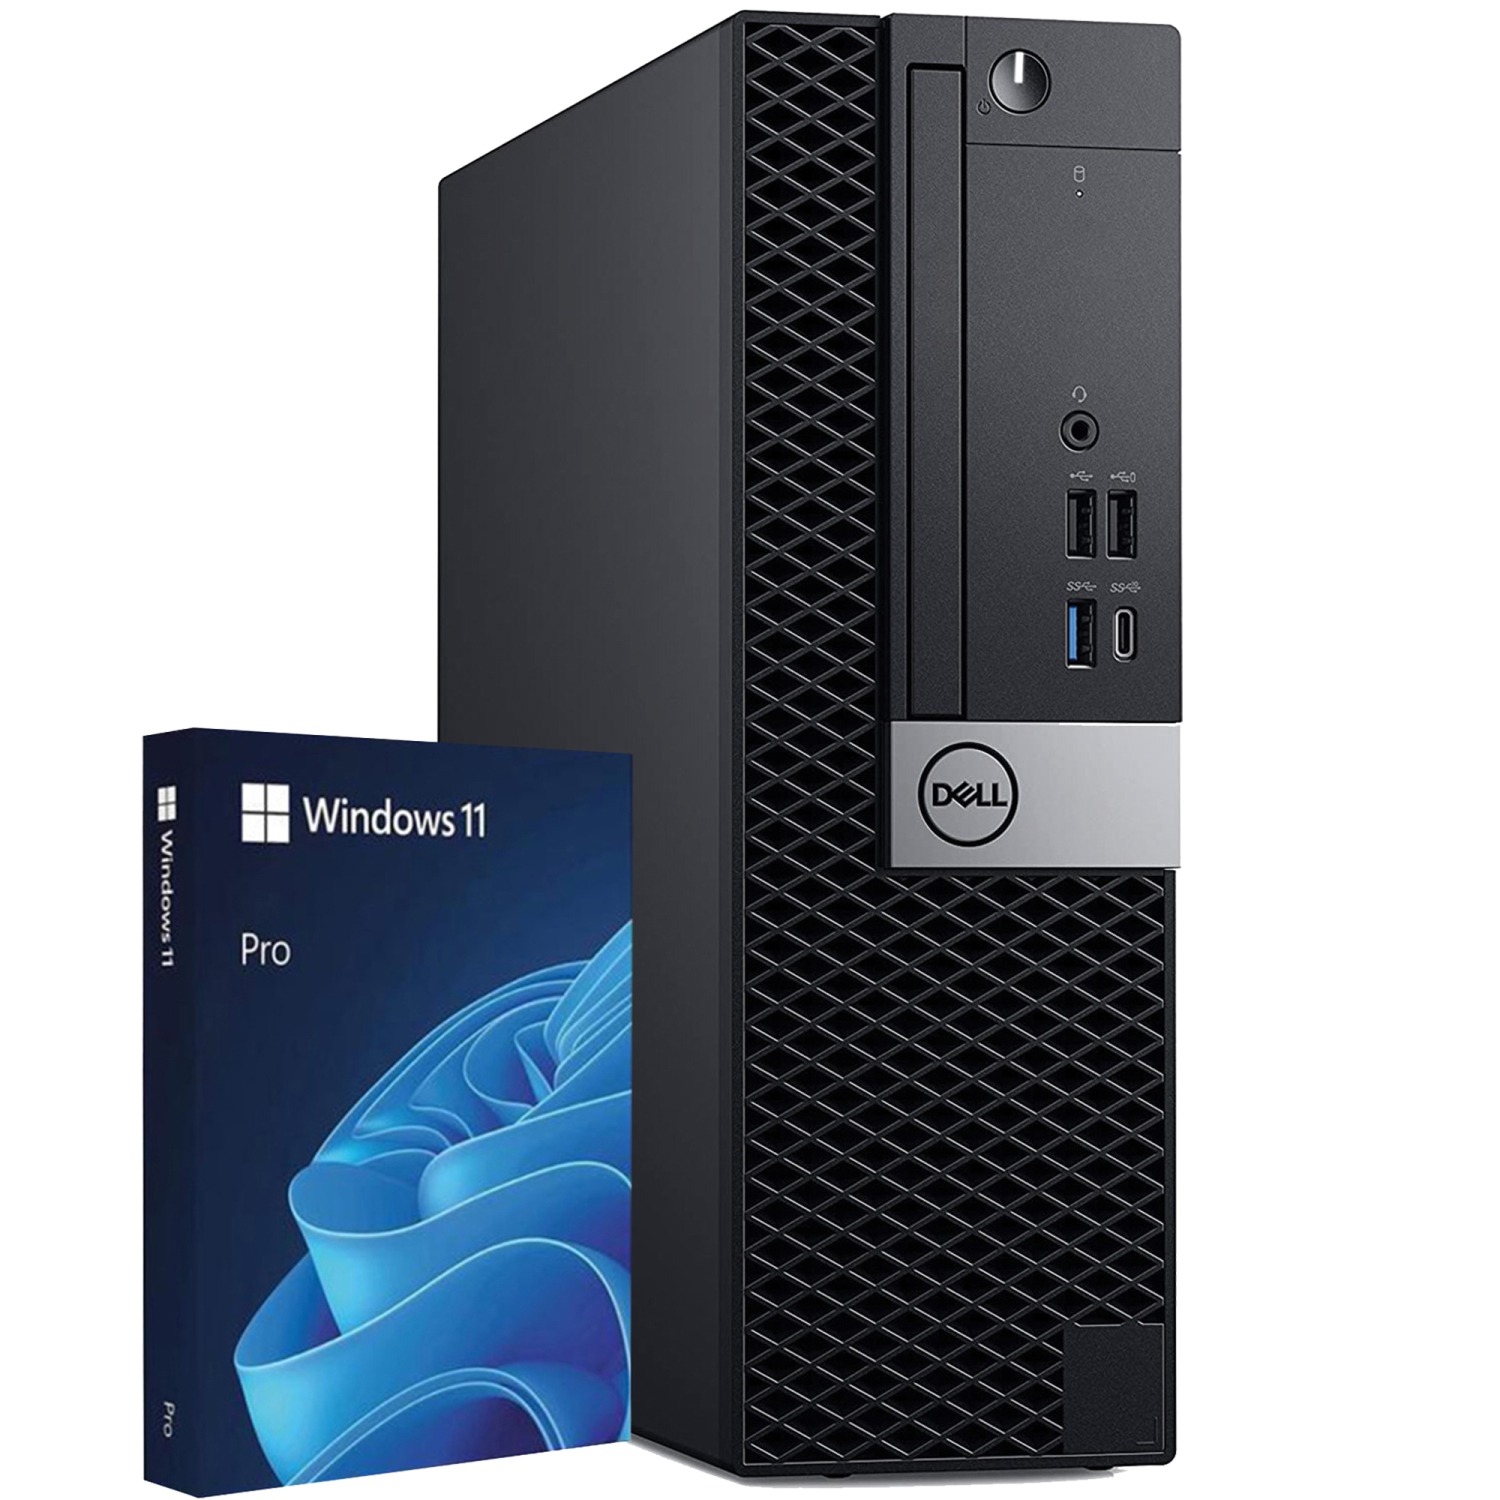 Refurbished (Good) - Professional Desktop PC Dell OptiPlex SFF Computer (Intel Core i5 8th Gen Processor| 1TB M.2 NVMe SSD| 16GB RAM| Windows 11 Pro| Wireless Keyboard and Mouse)